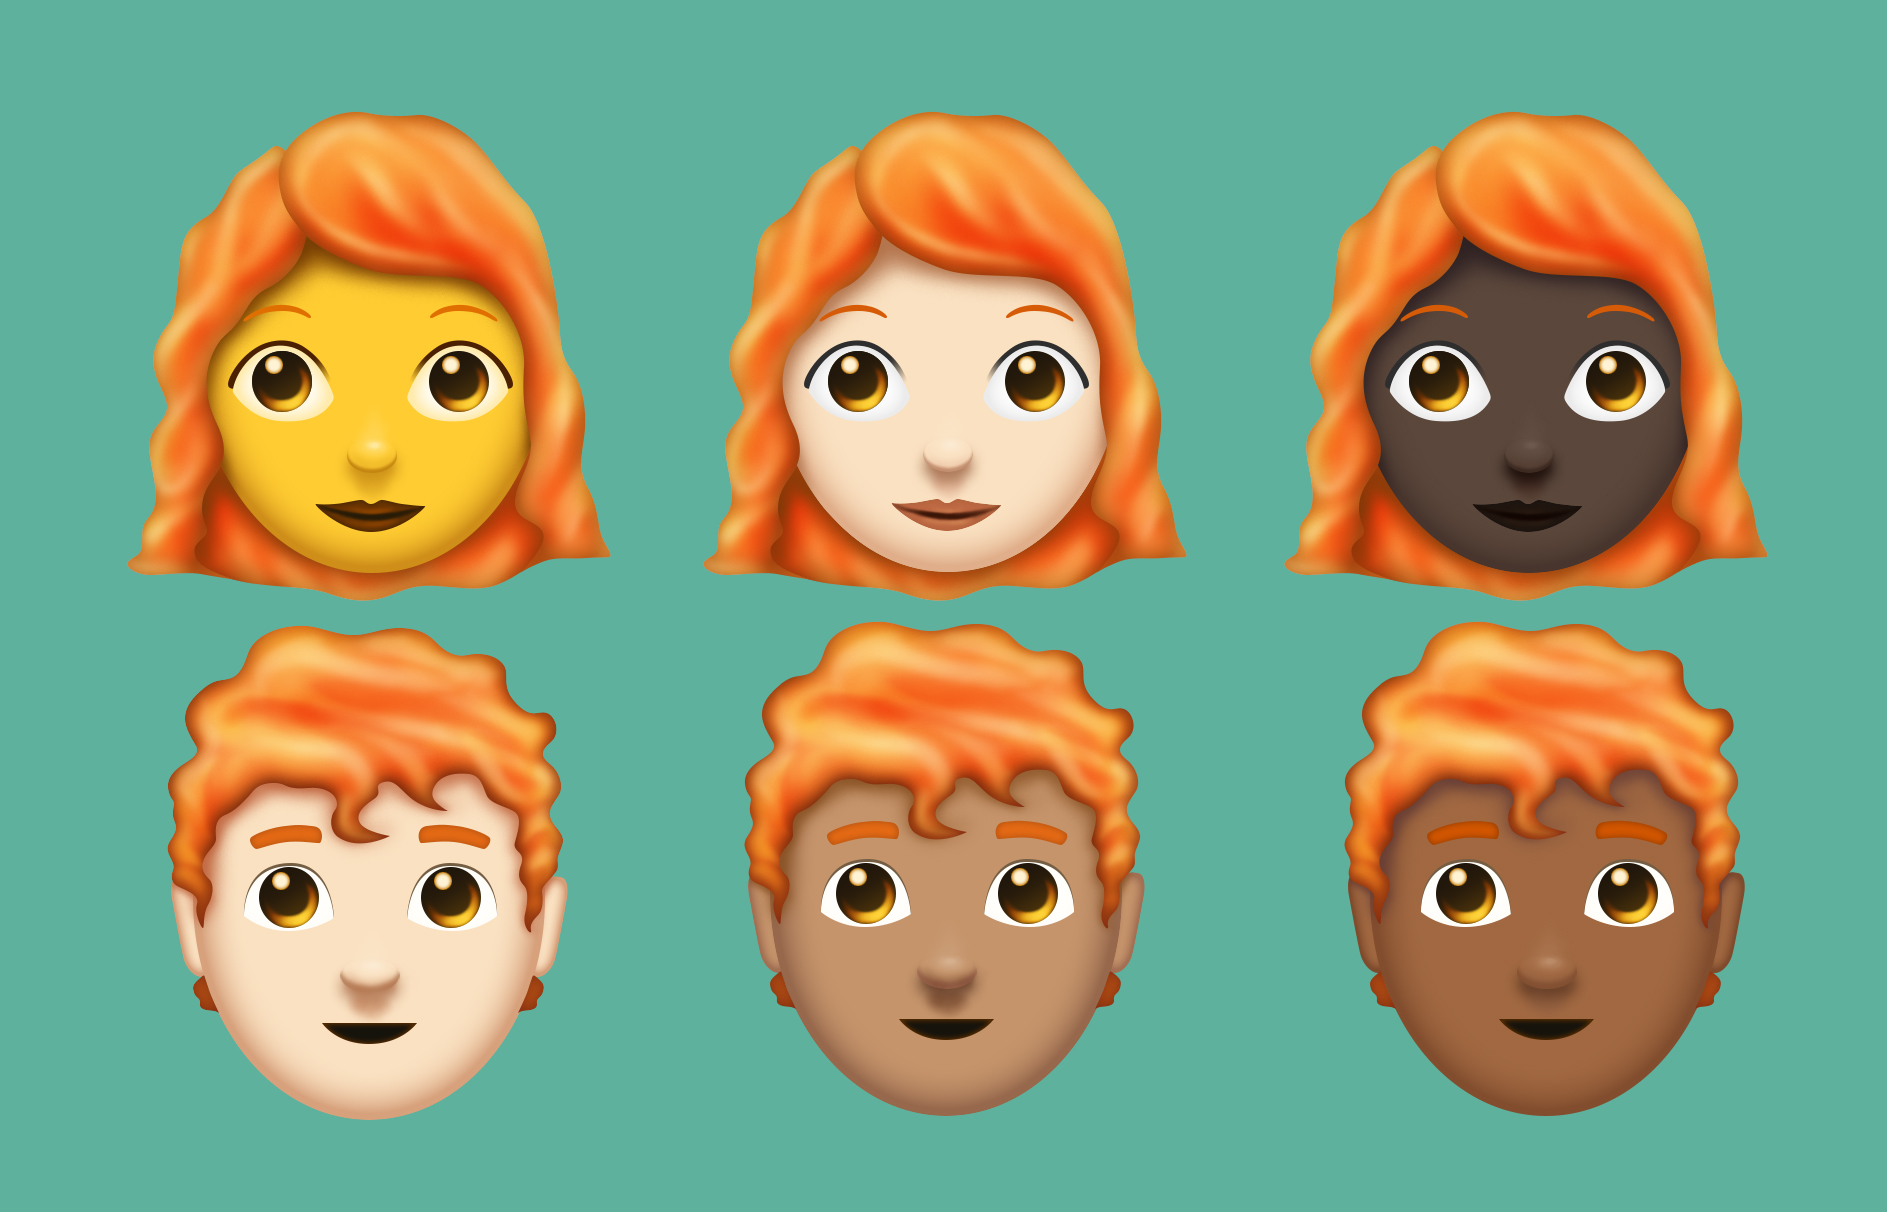 Red-haired emoji (Emojipedia)